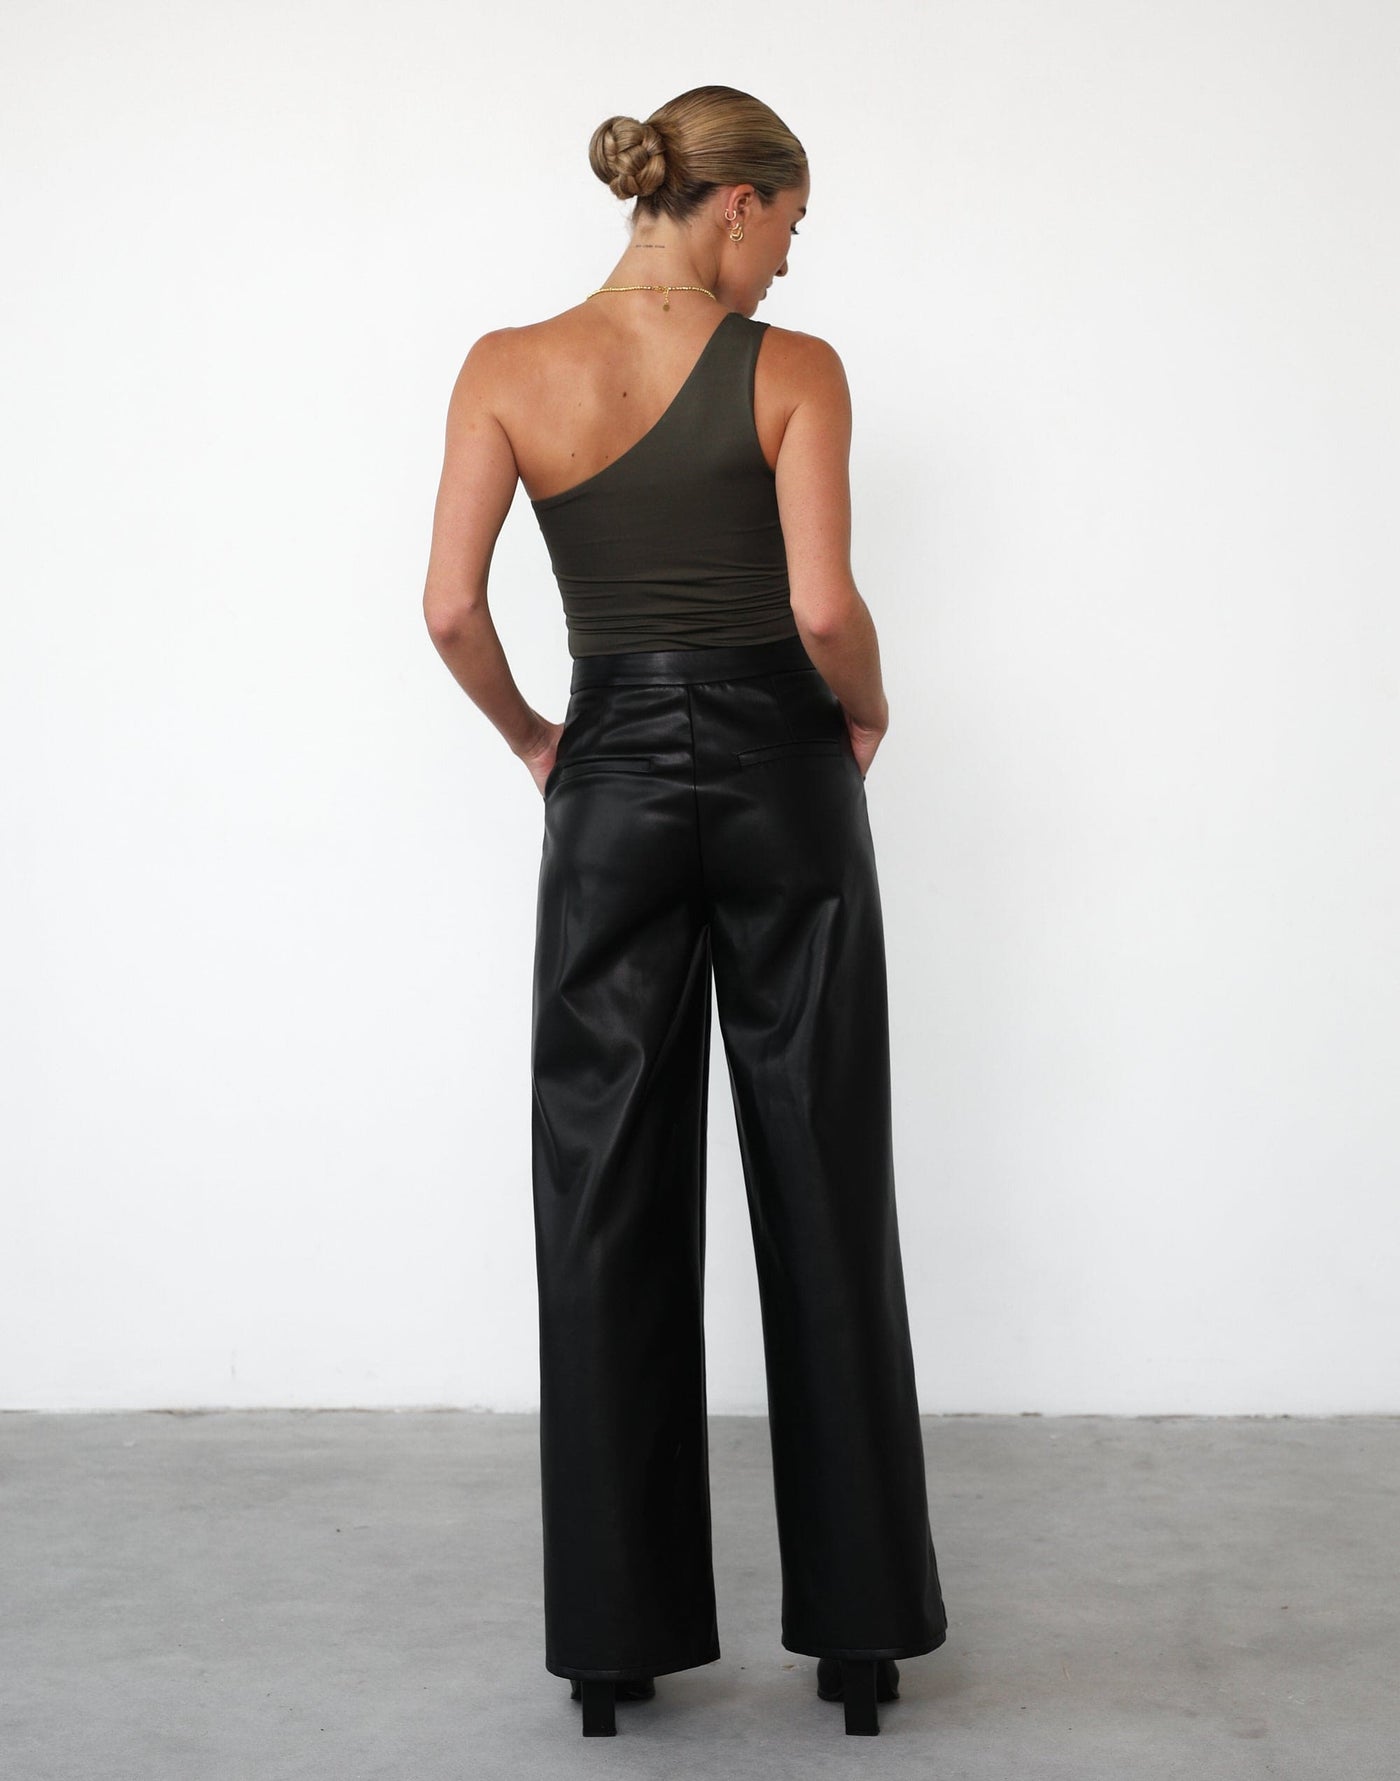 Lights Out Bodysuit (Burnt Olive) - Burnt Olive Bodysuit - Women's Bodysuit - Charcoal Clothing